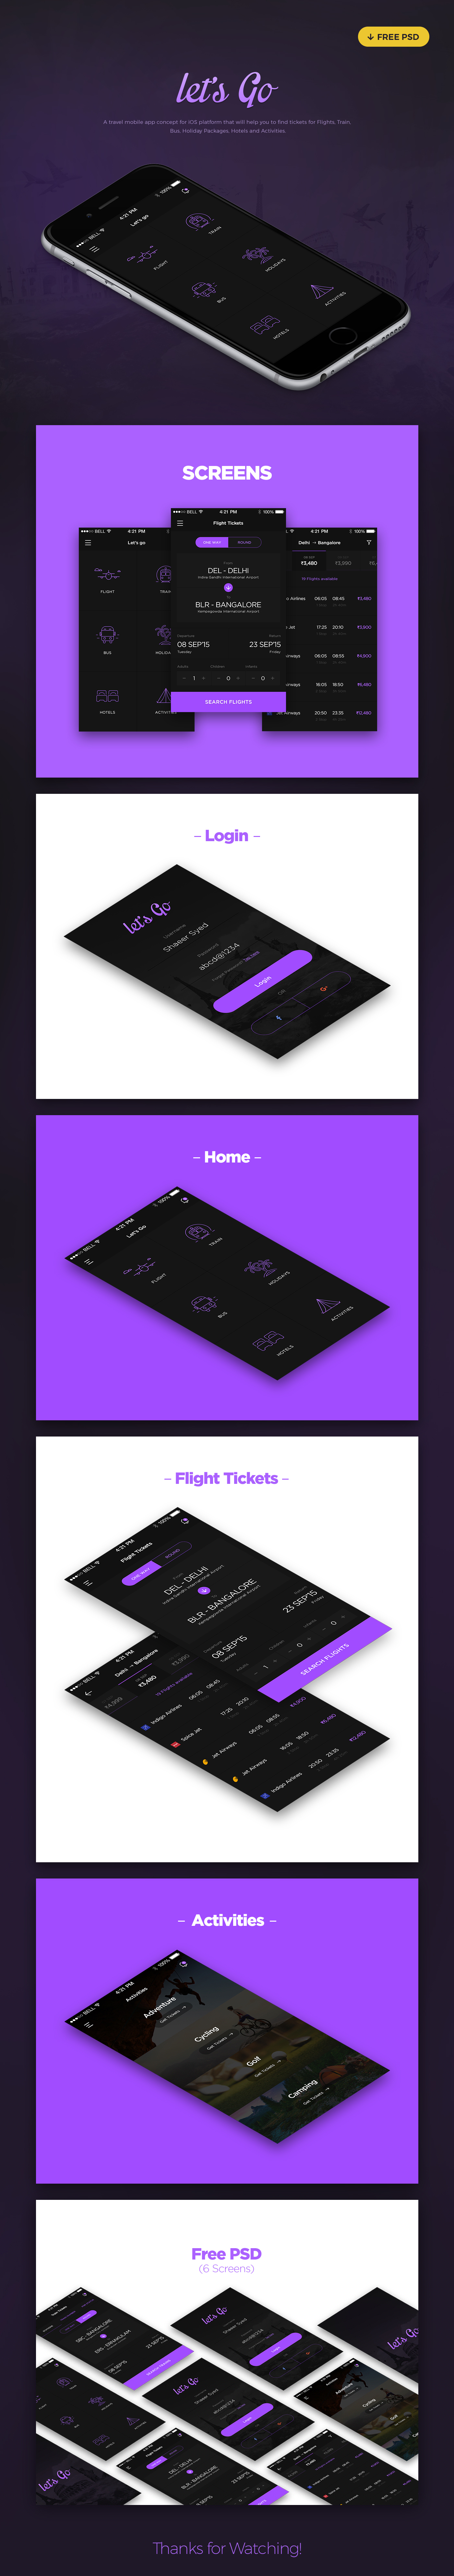 UI ux Travel app concept free psd ui kit flight ticket train hotels holidays mobile ios